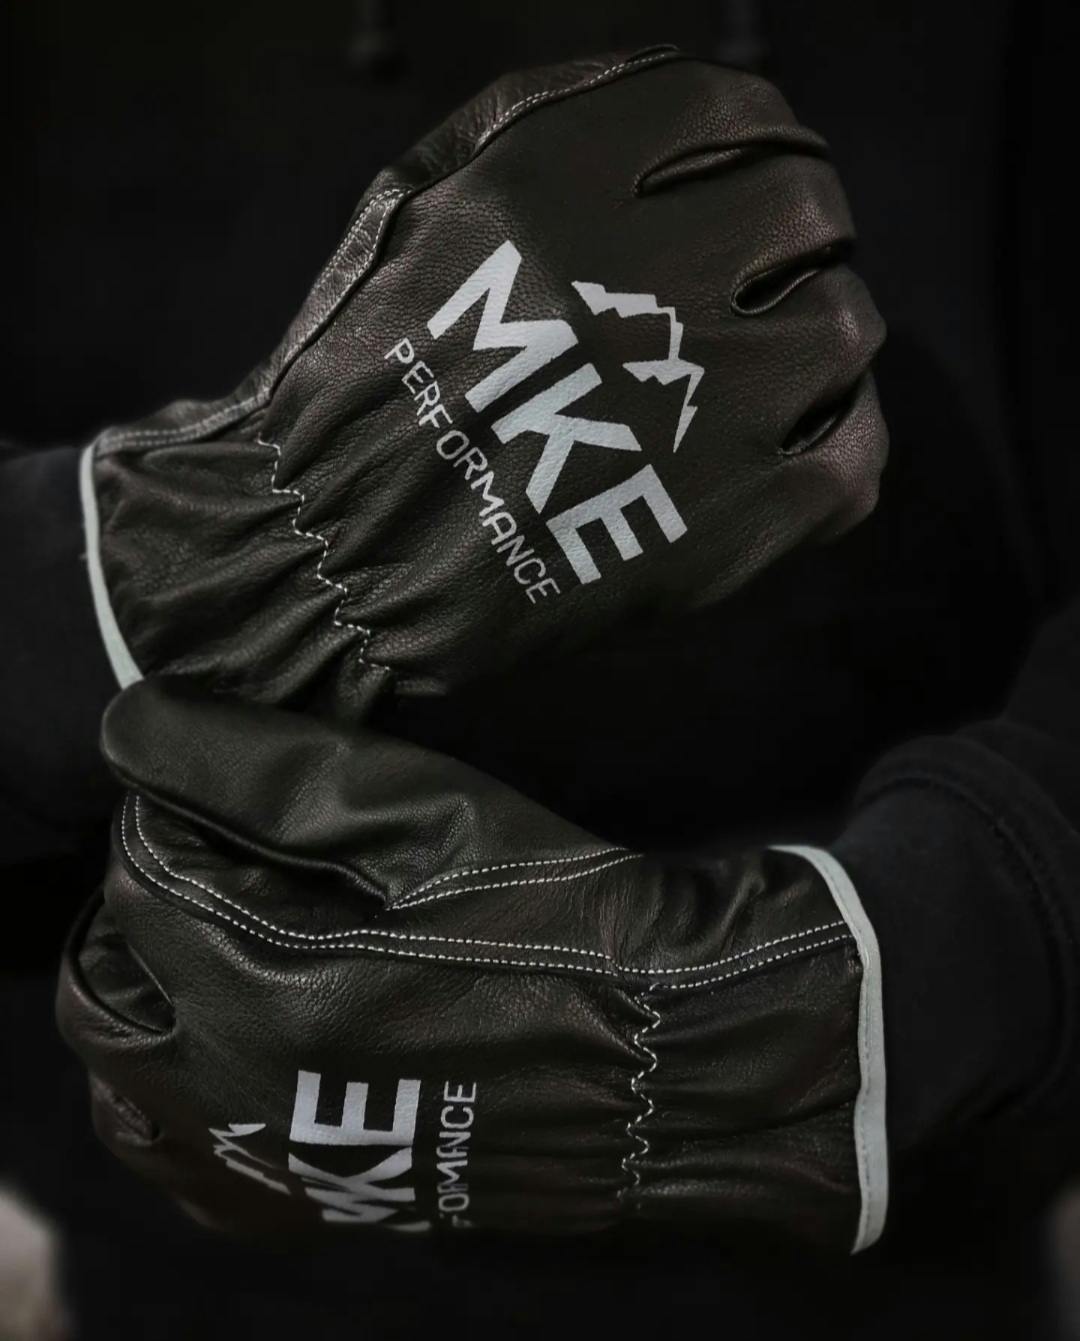 MKE Arcdef TIG handske. - By welders for welders!